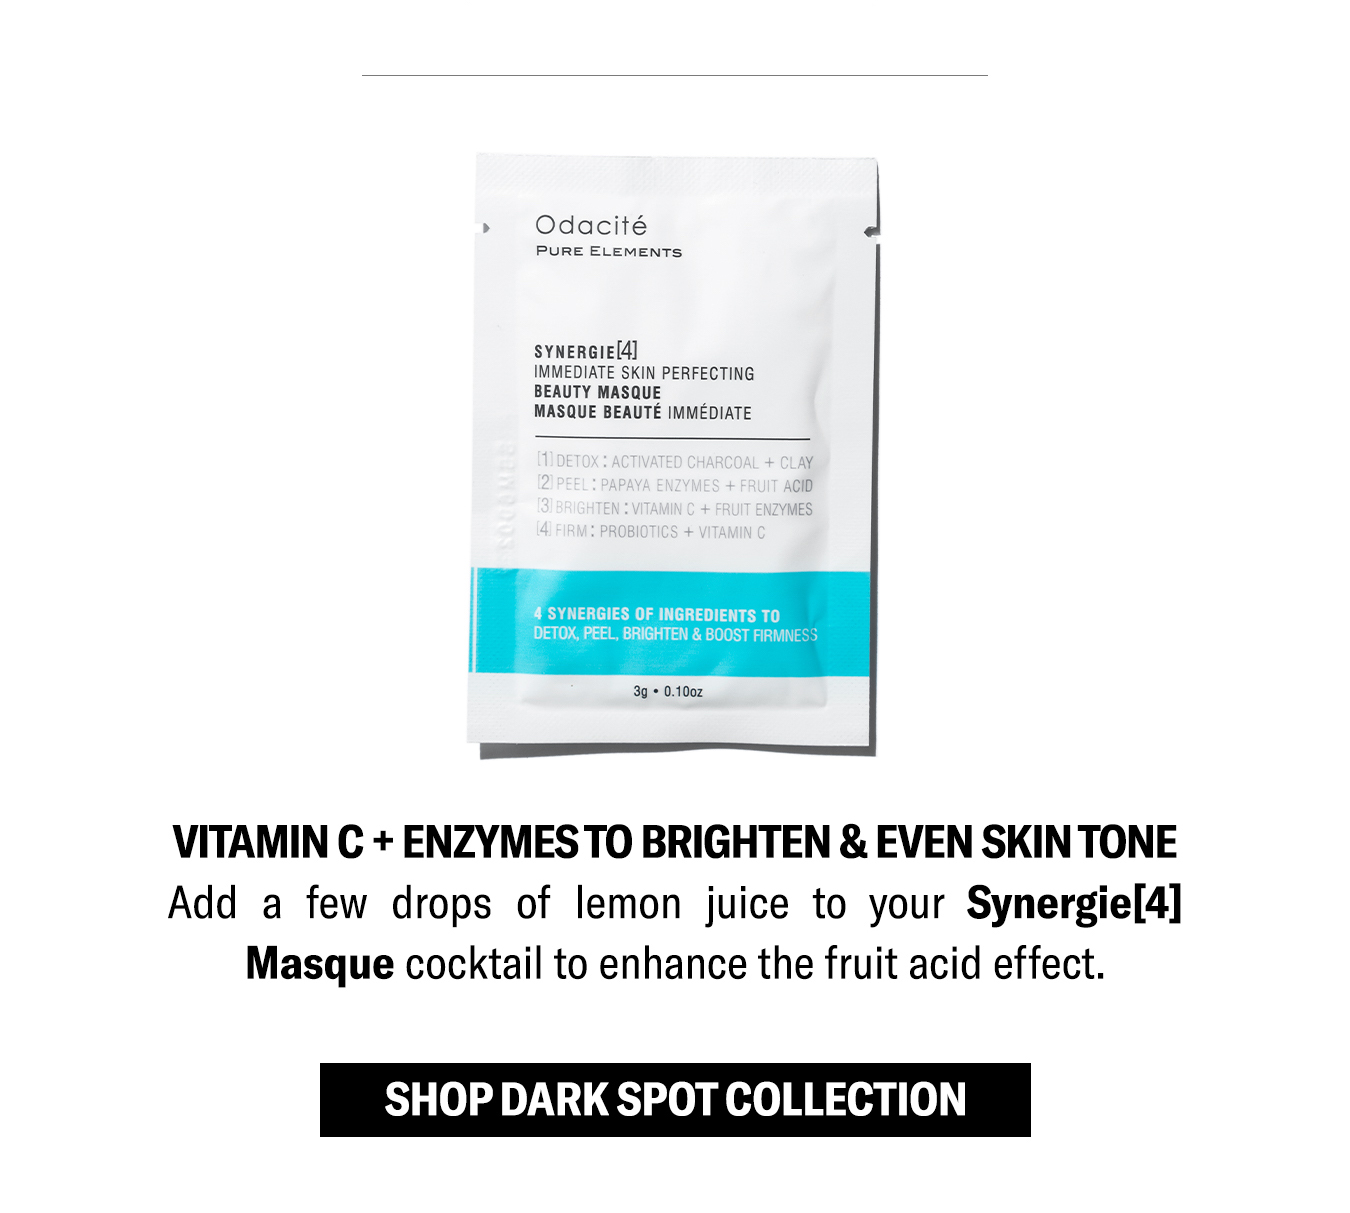 Vitamin C + Enzymes to brighten & even skin tone.